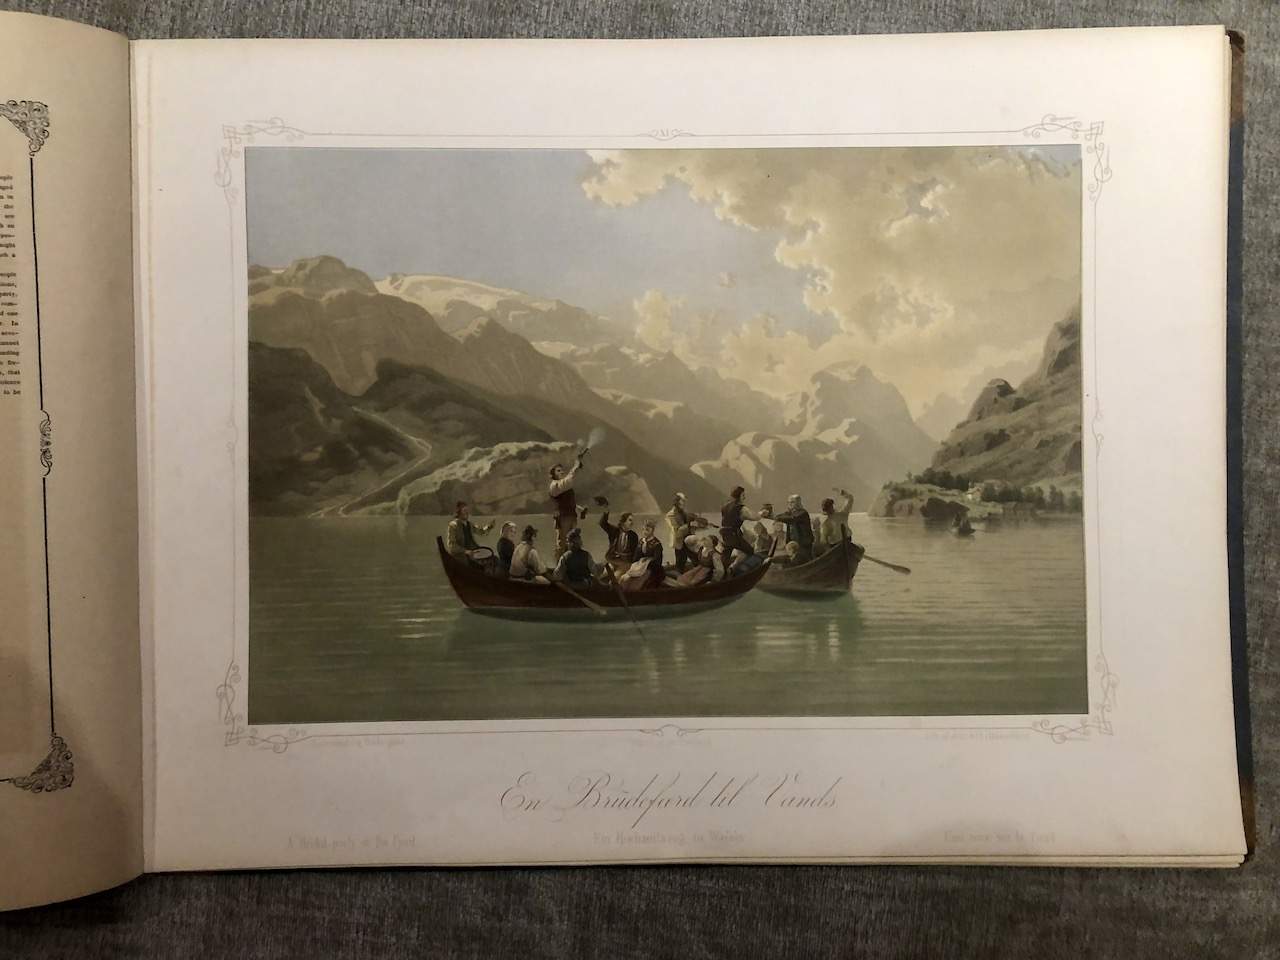 Sjelden bok med litografier. Norske Folkelivsbilleder, 1854